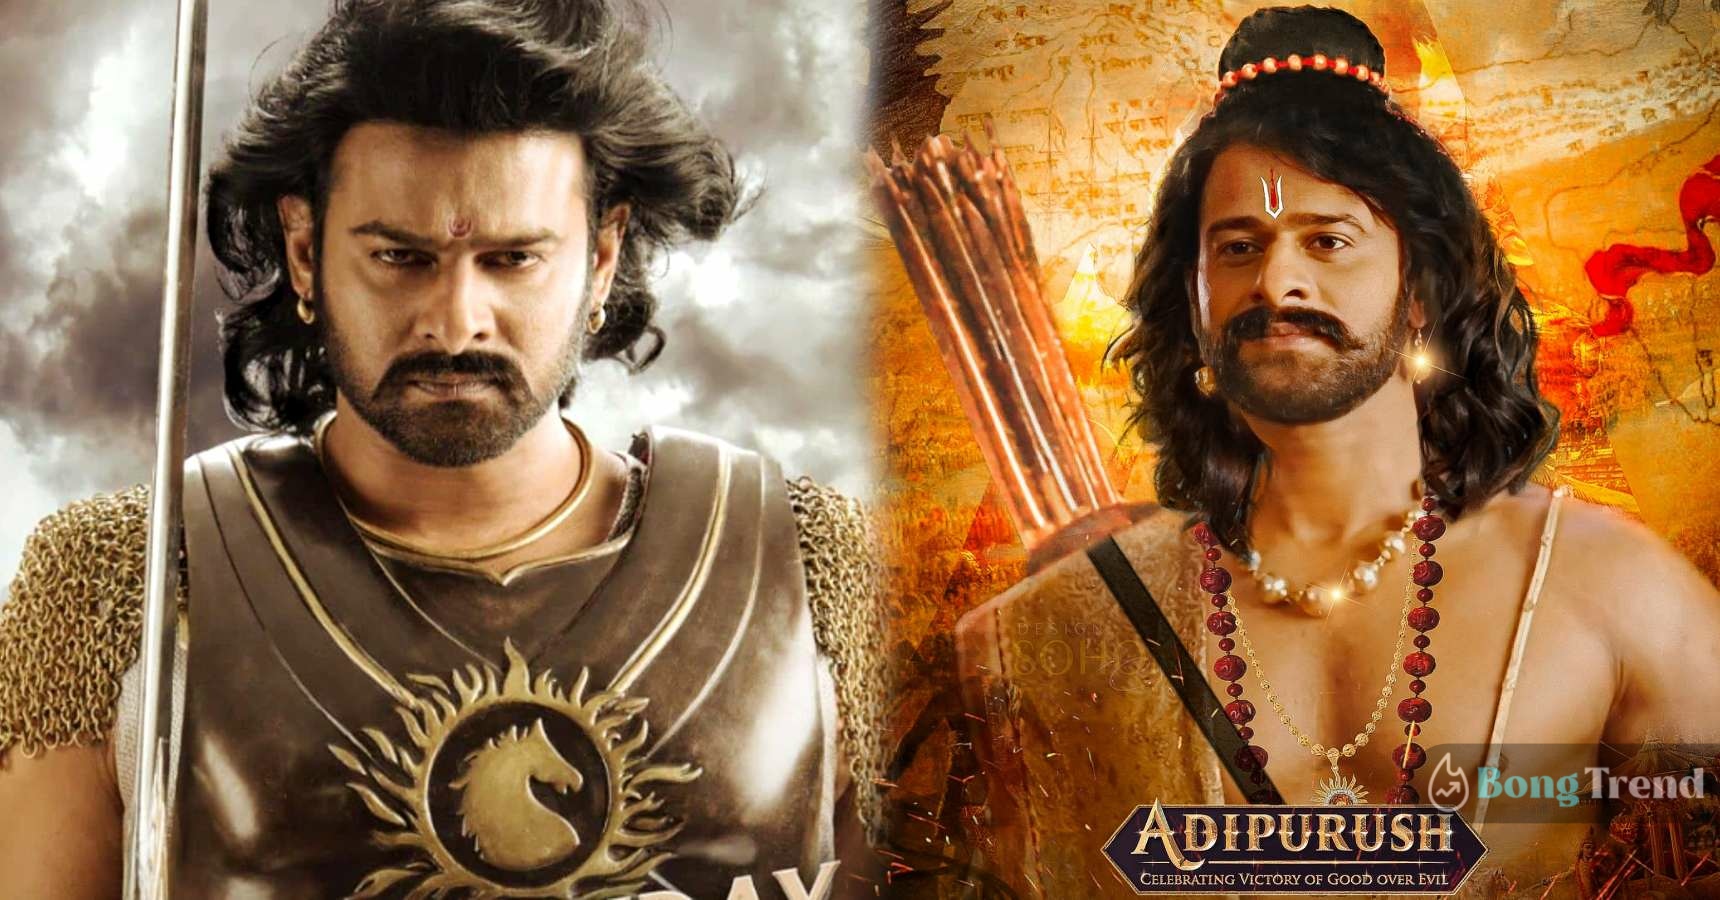 bahubali star Prabhas all set to break records with Adipurush Movie